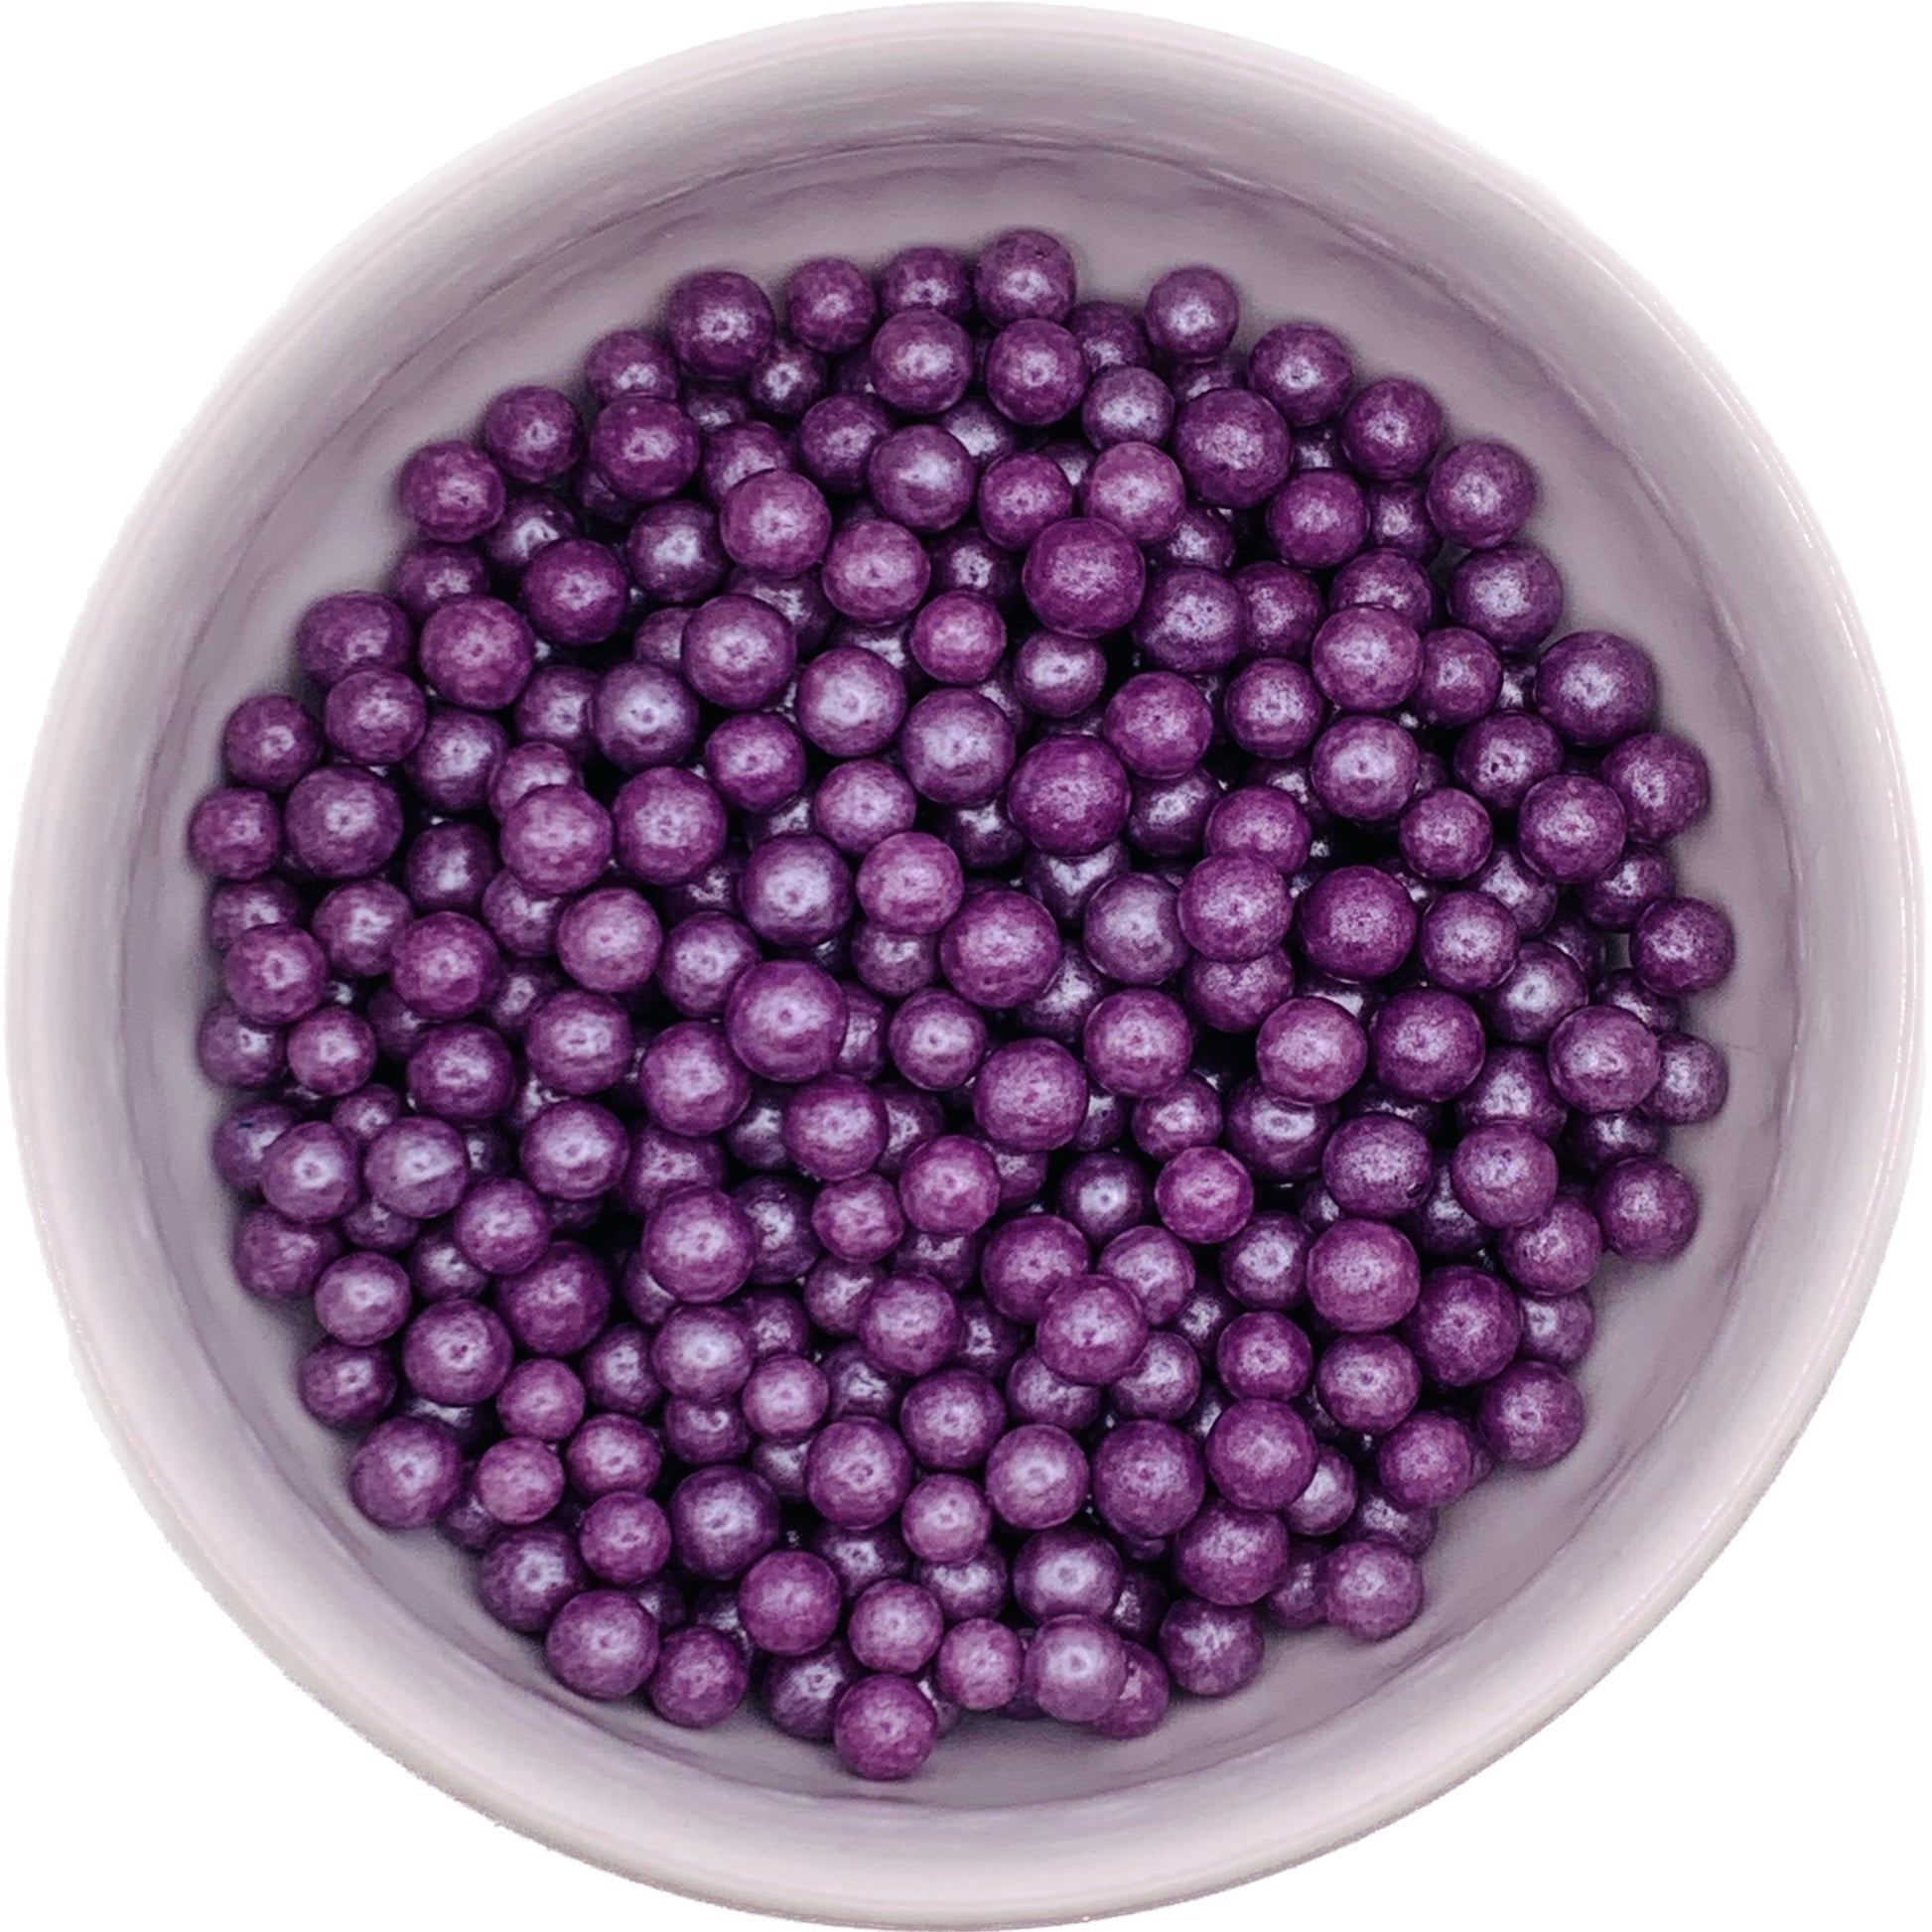 Edible Purple Pearls 4mm